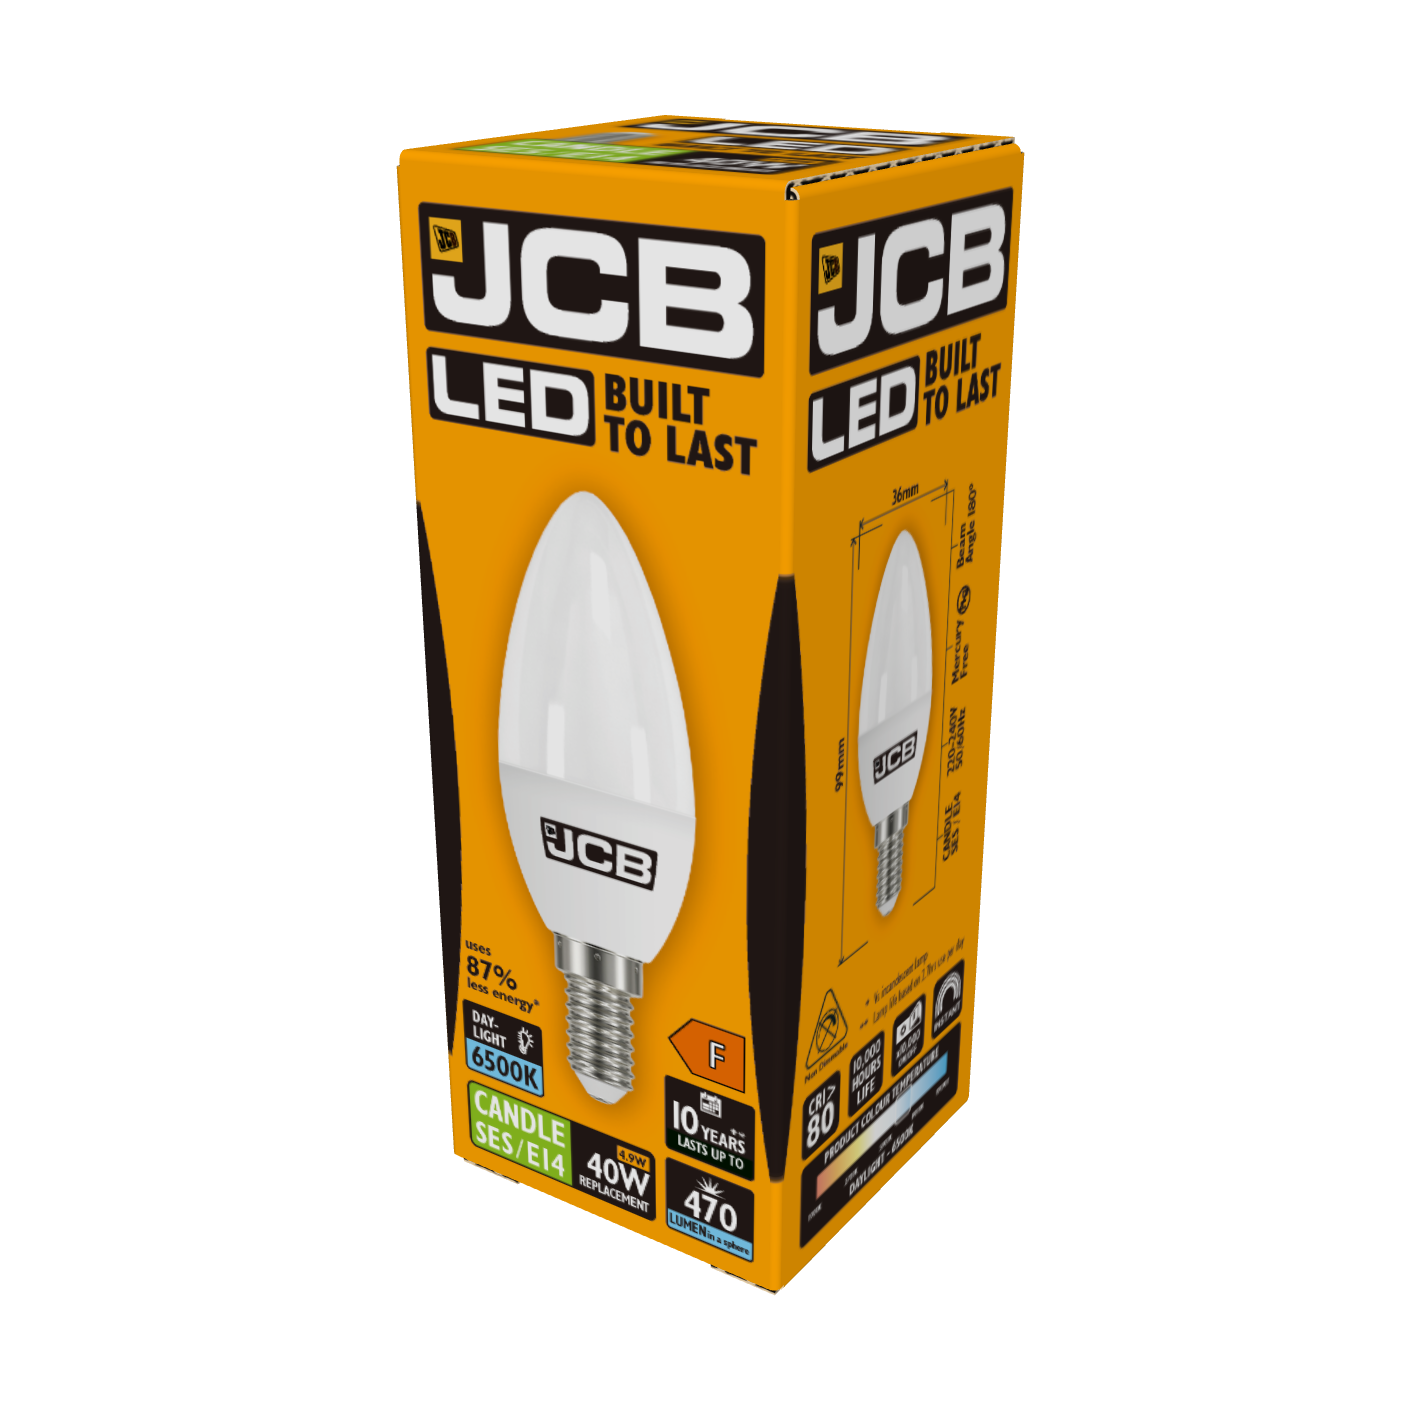 JCB LED Candle E14 (SES) 470lm 4.9W 6,500K (Daylight), Box of 1